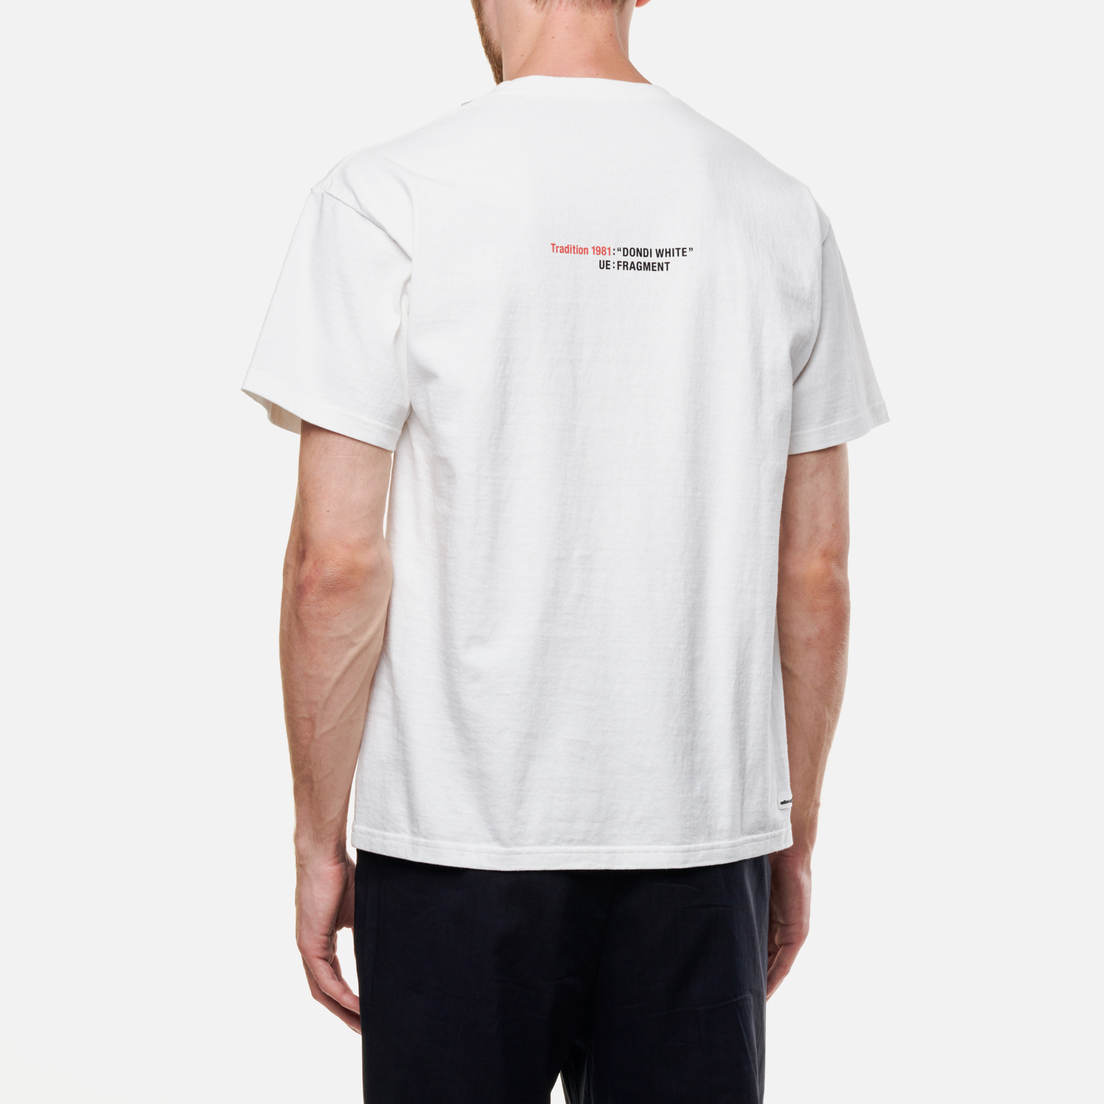 uniform experiment Мужская футболка x Dondi White Tradition 1981